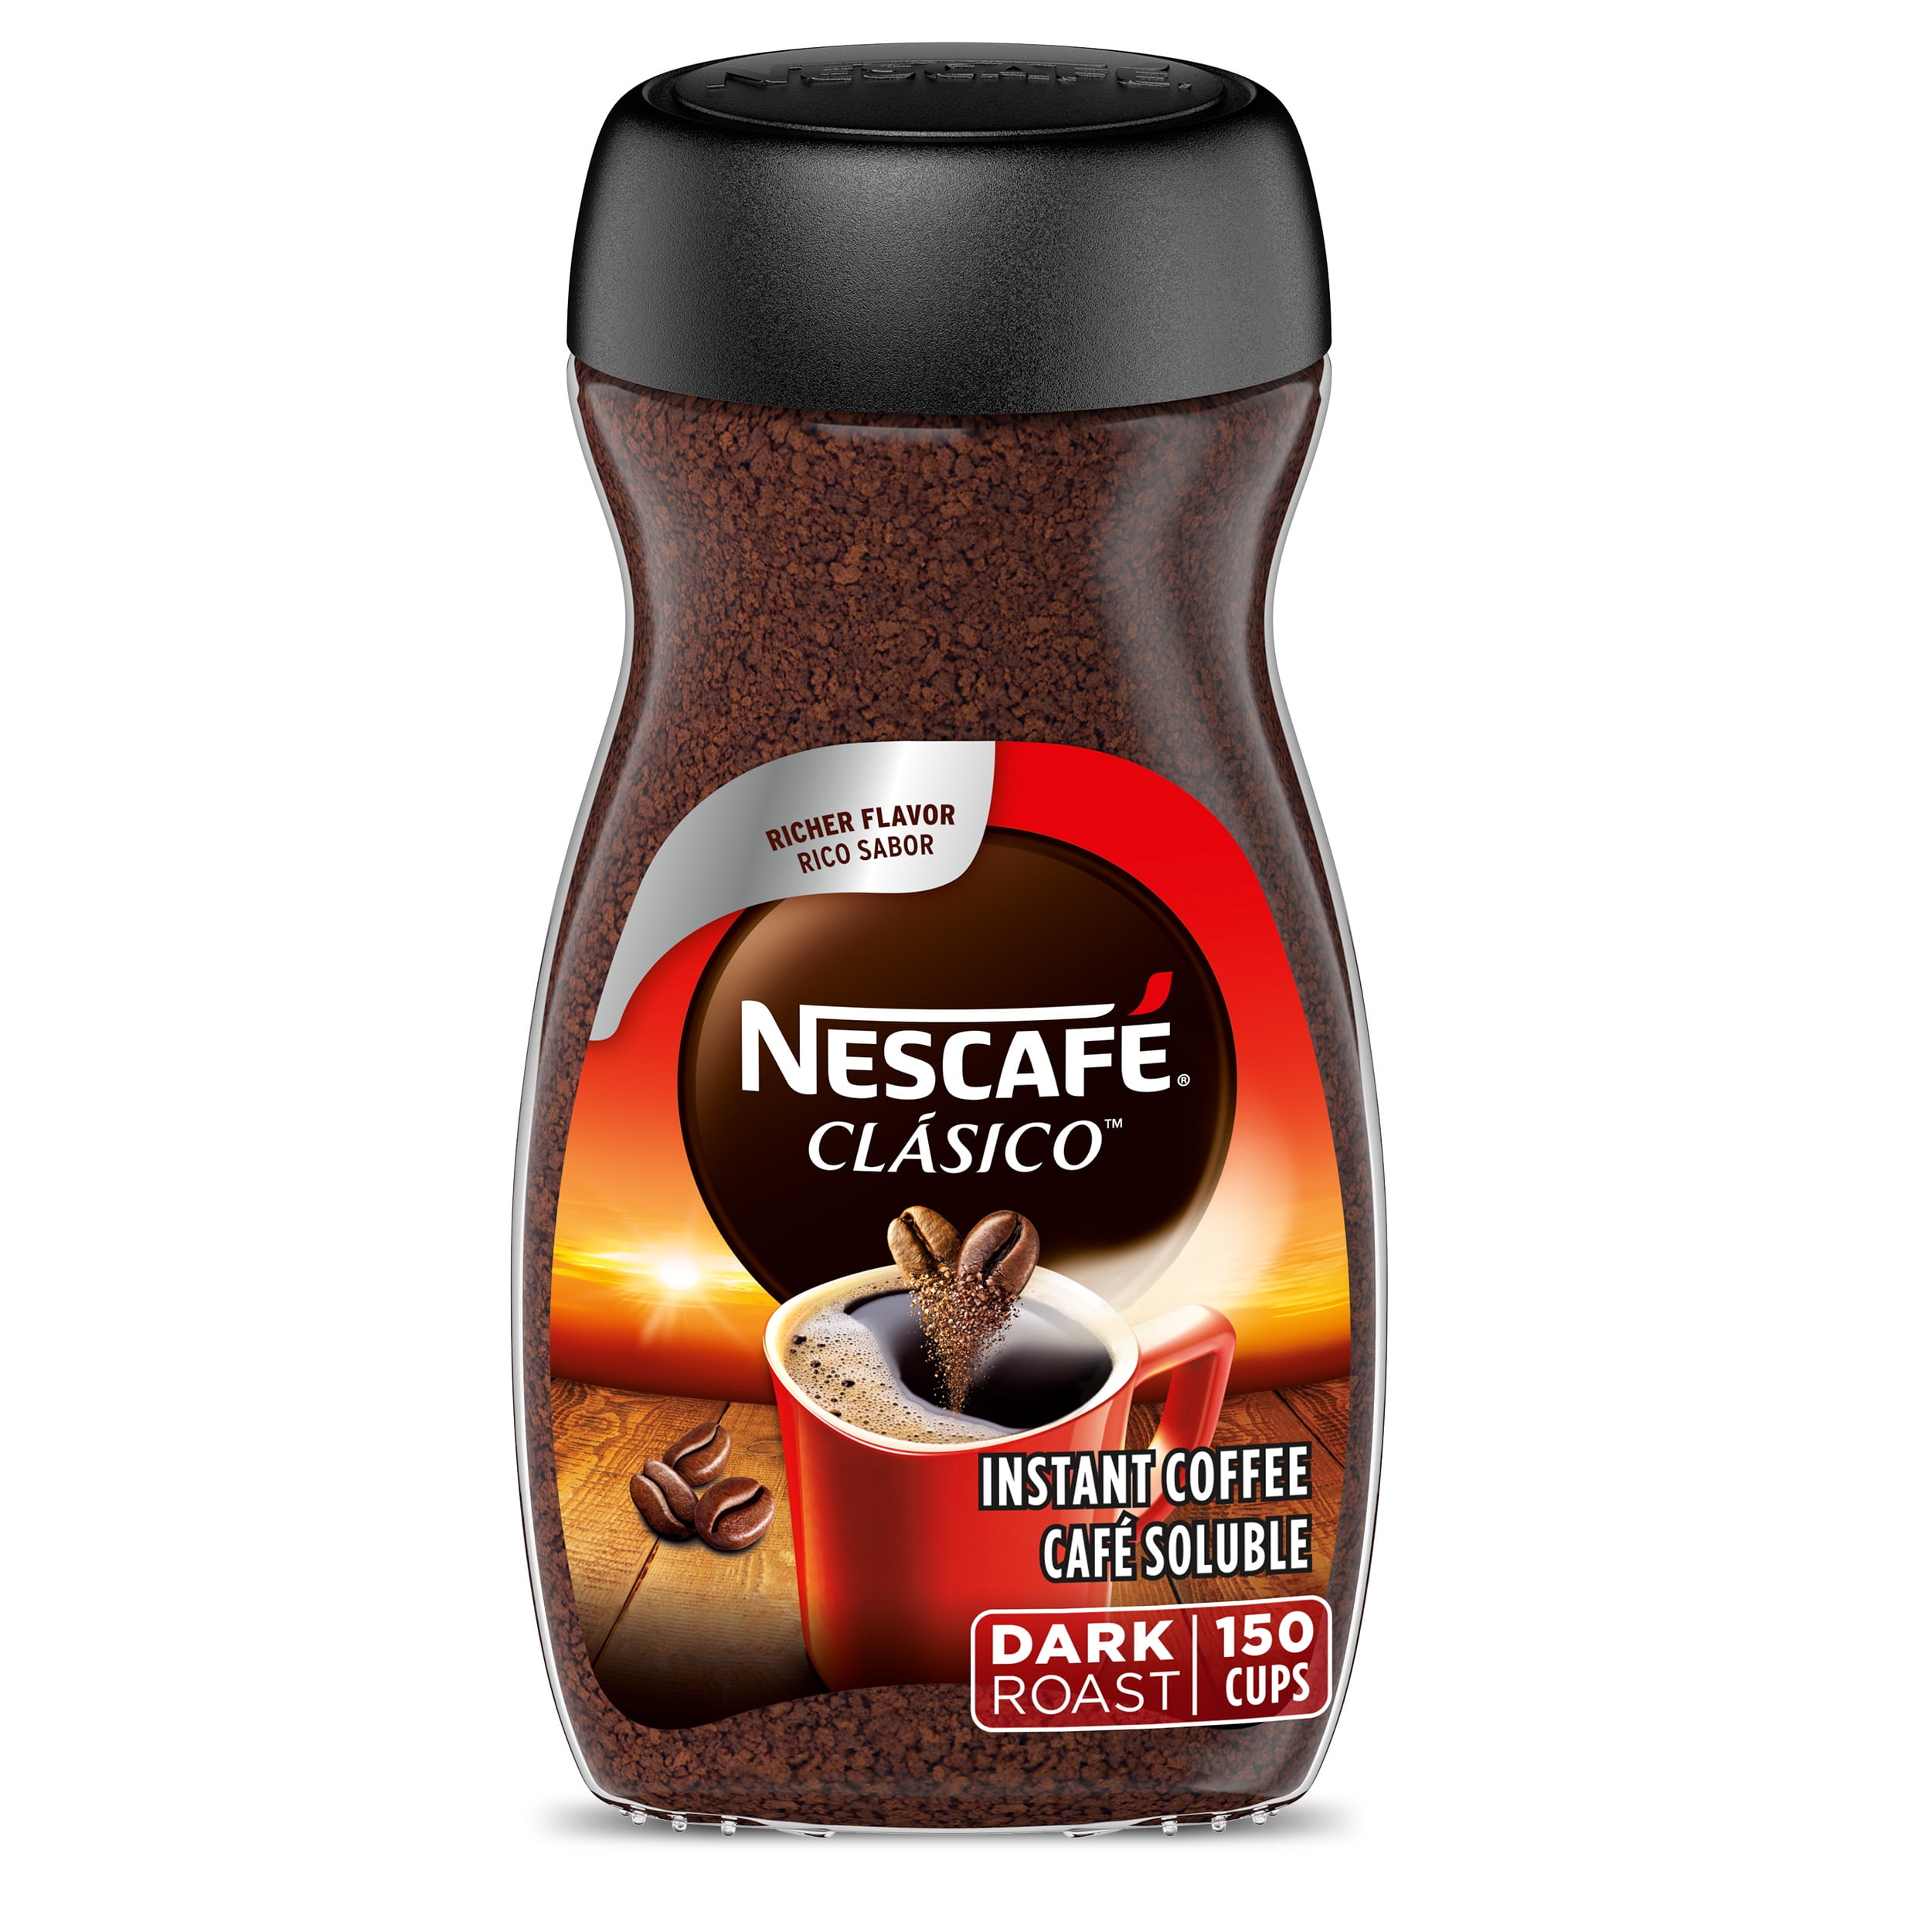 NESCAFÉ CLÁSICO Dark Roast, Instant Coffee, 1 Jar, 10.5 oz